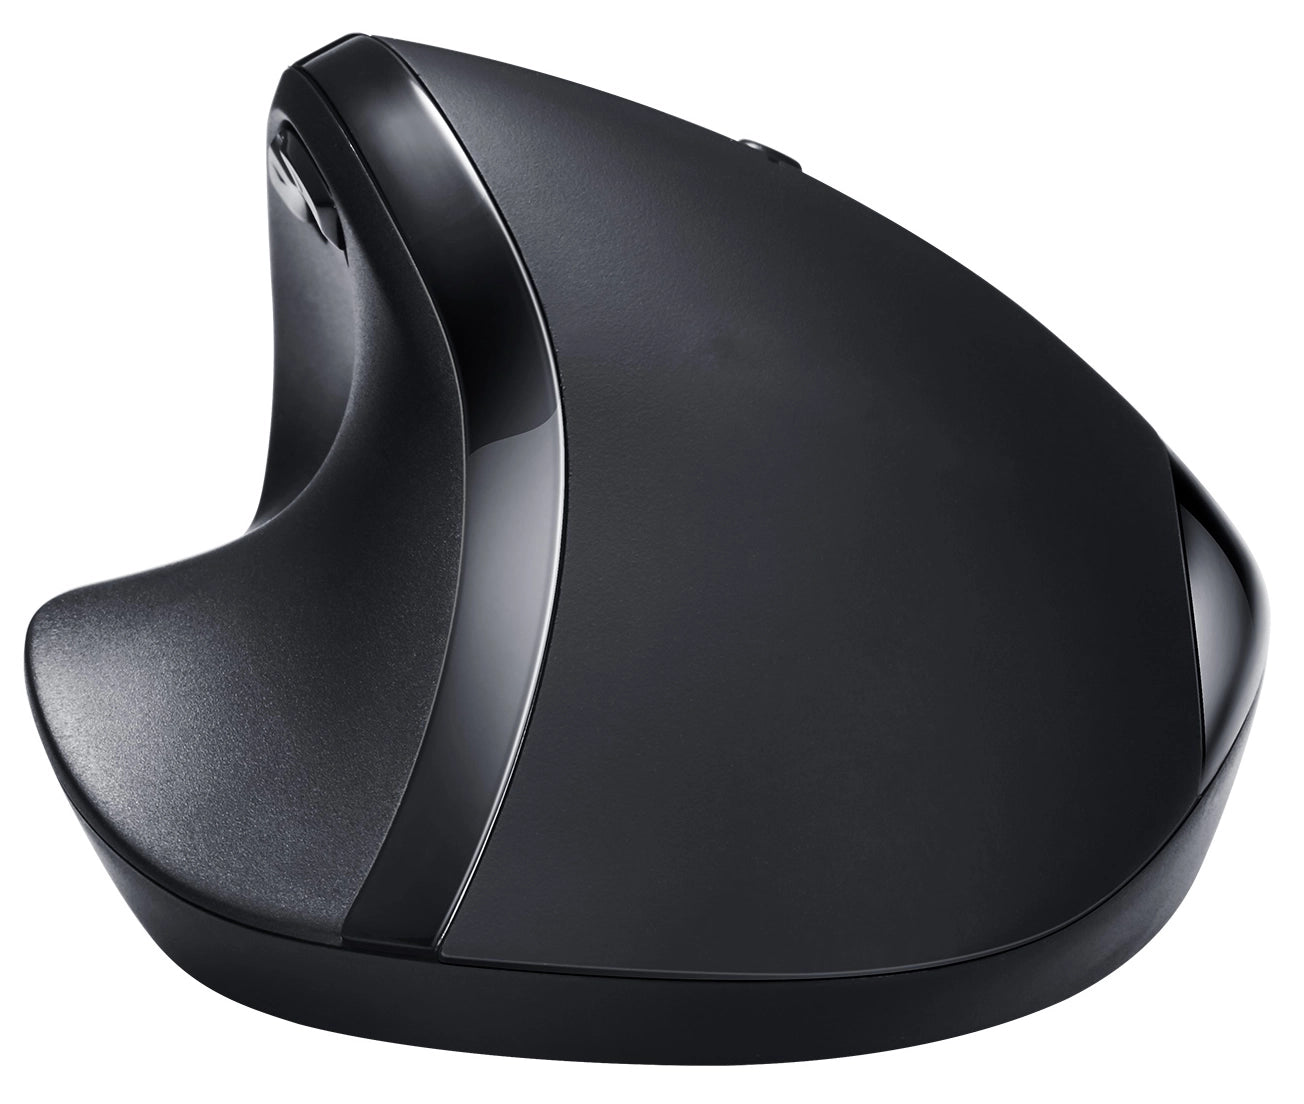 Newtral Laser Mouse - Medium Wireless